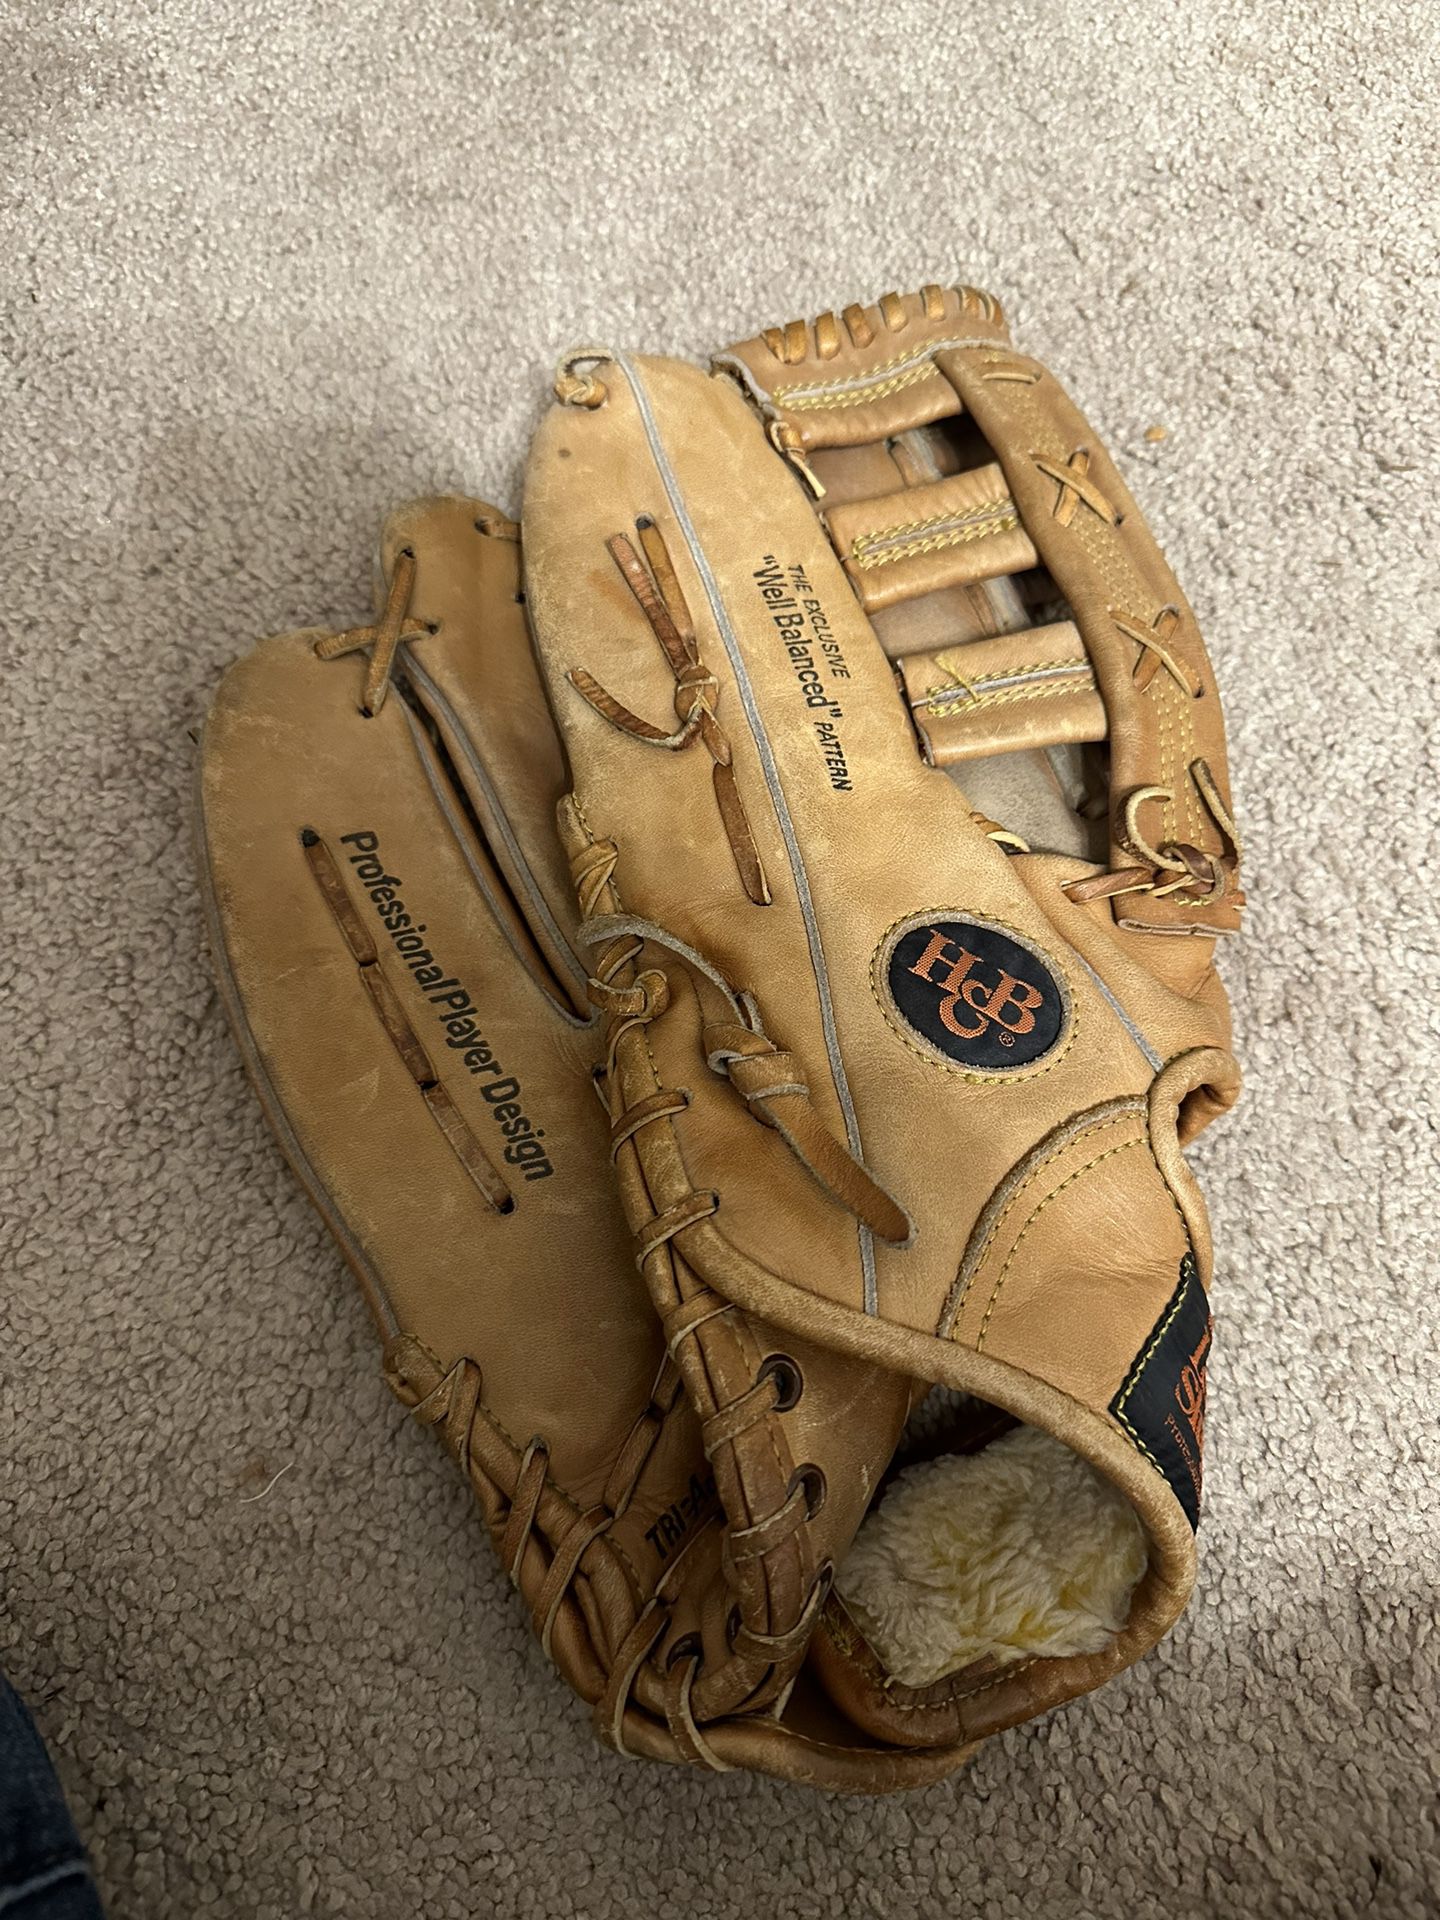 Baseball Or softball Mitt / glove